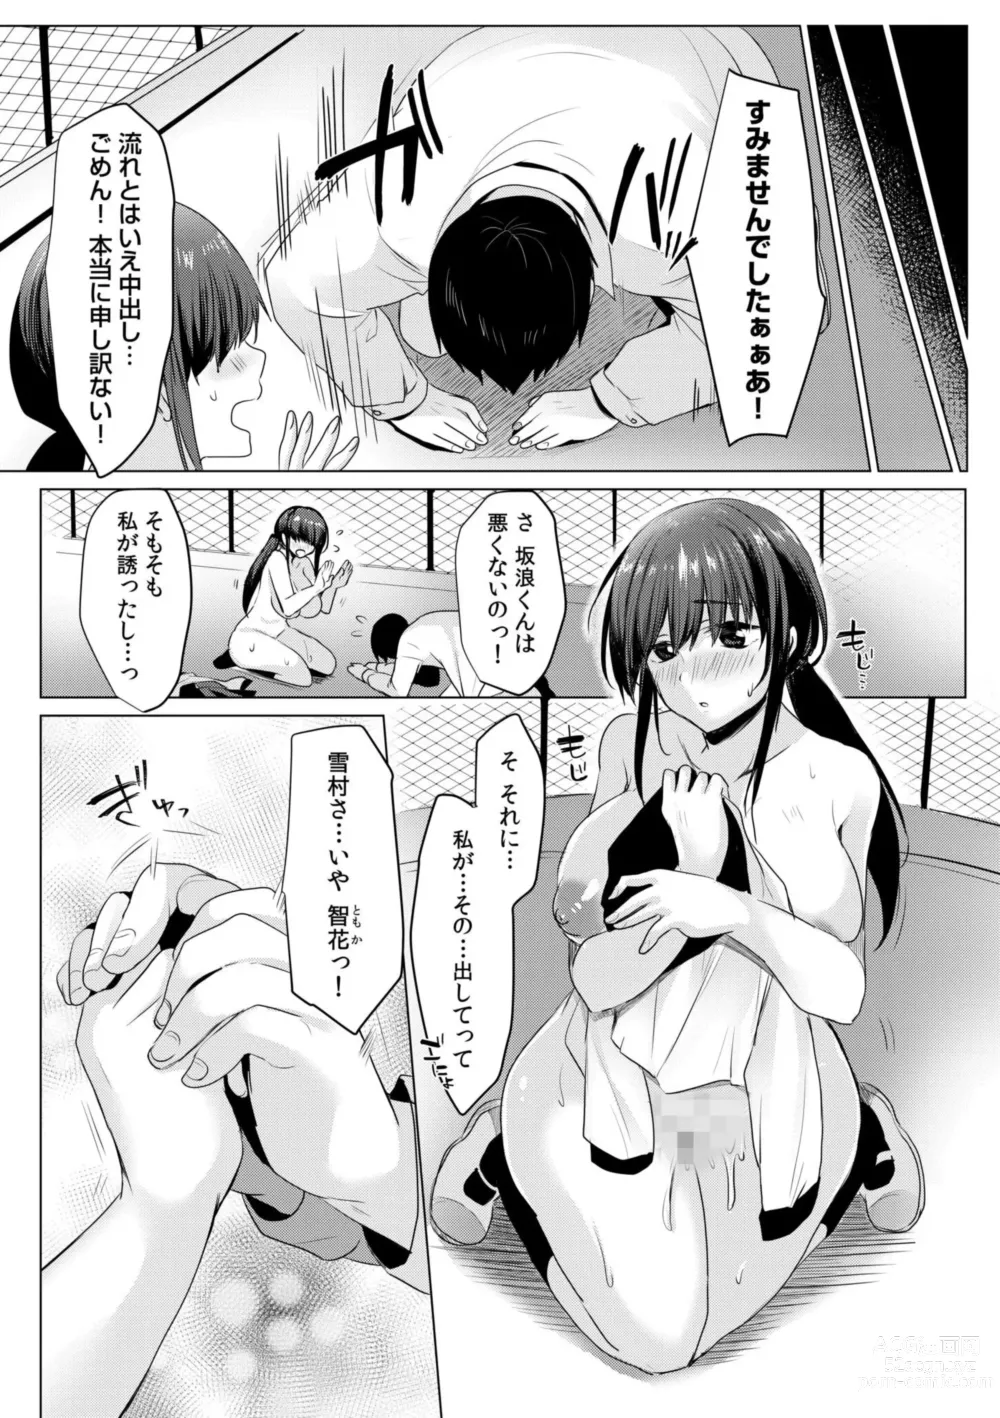 Page 24 of manga Netorarete, Miserarete. - Enchanted by being cuckolded 1